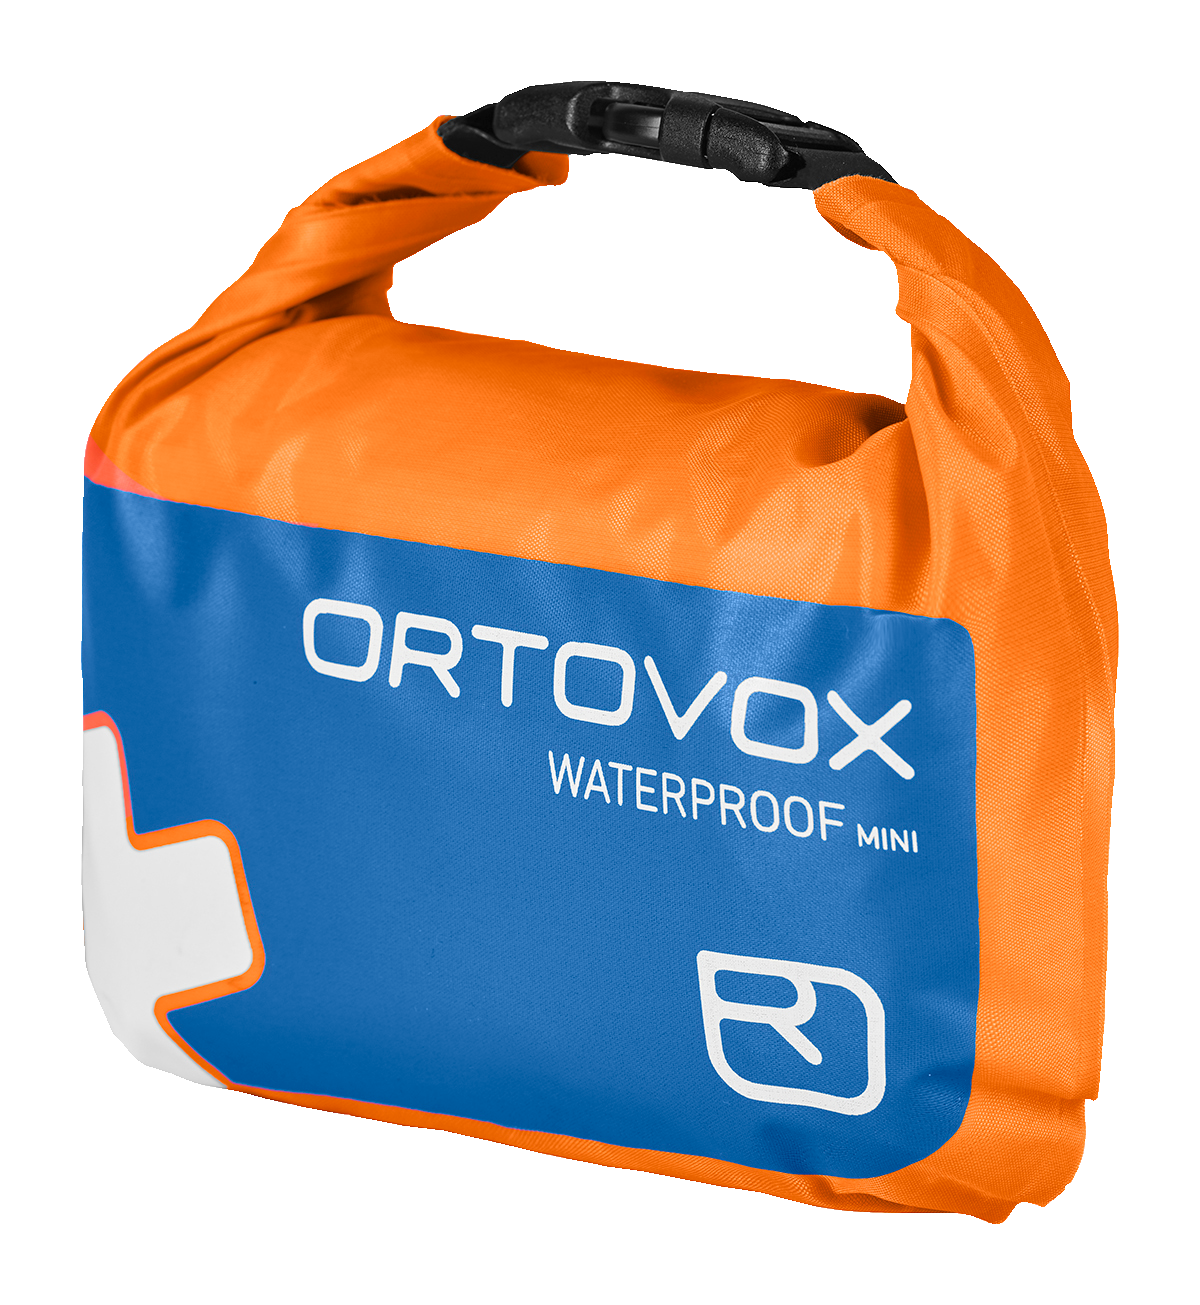 Ortovox First Aid Waterproof Mini - Kit pronto soccorso